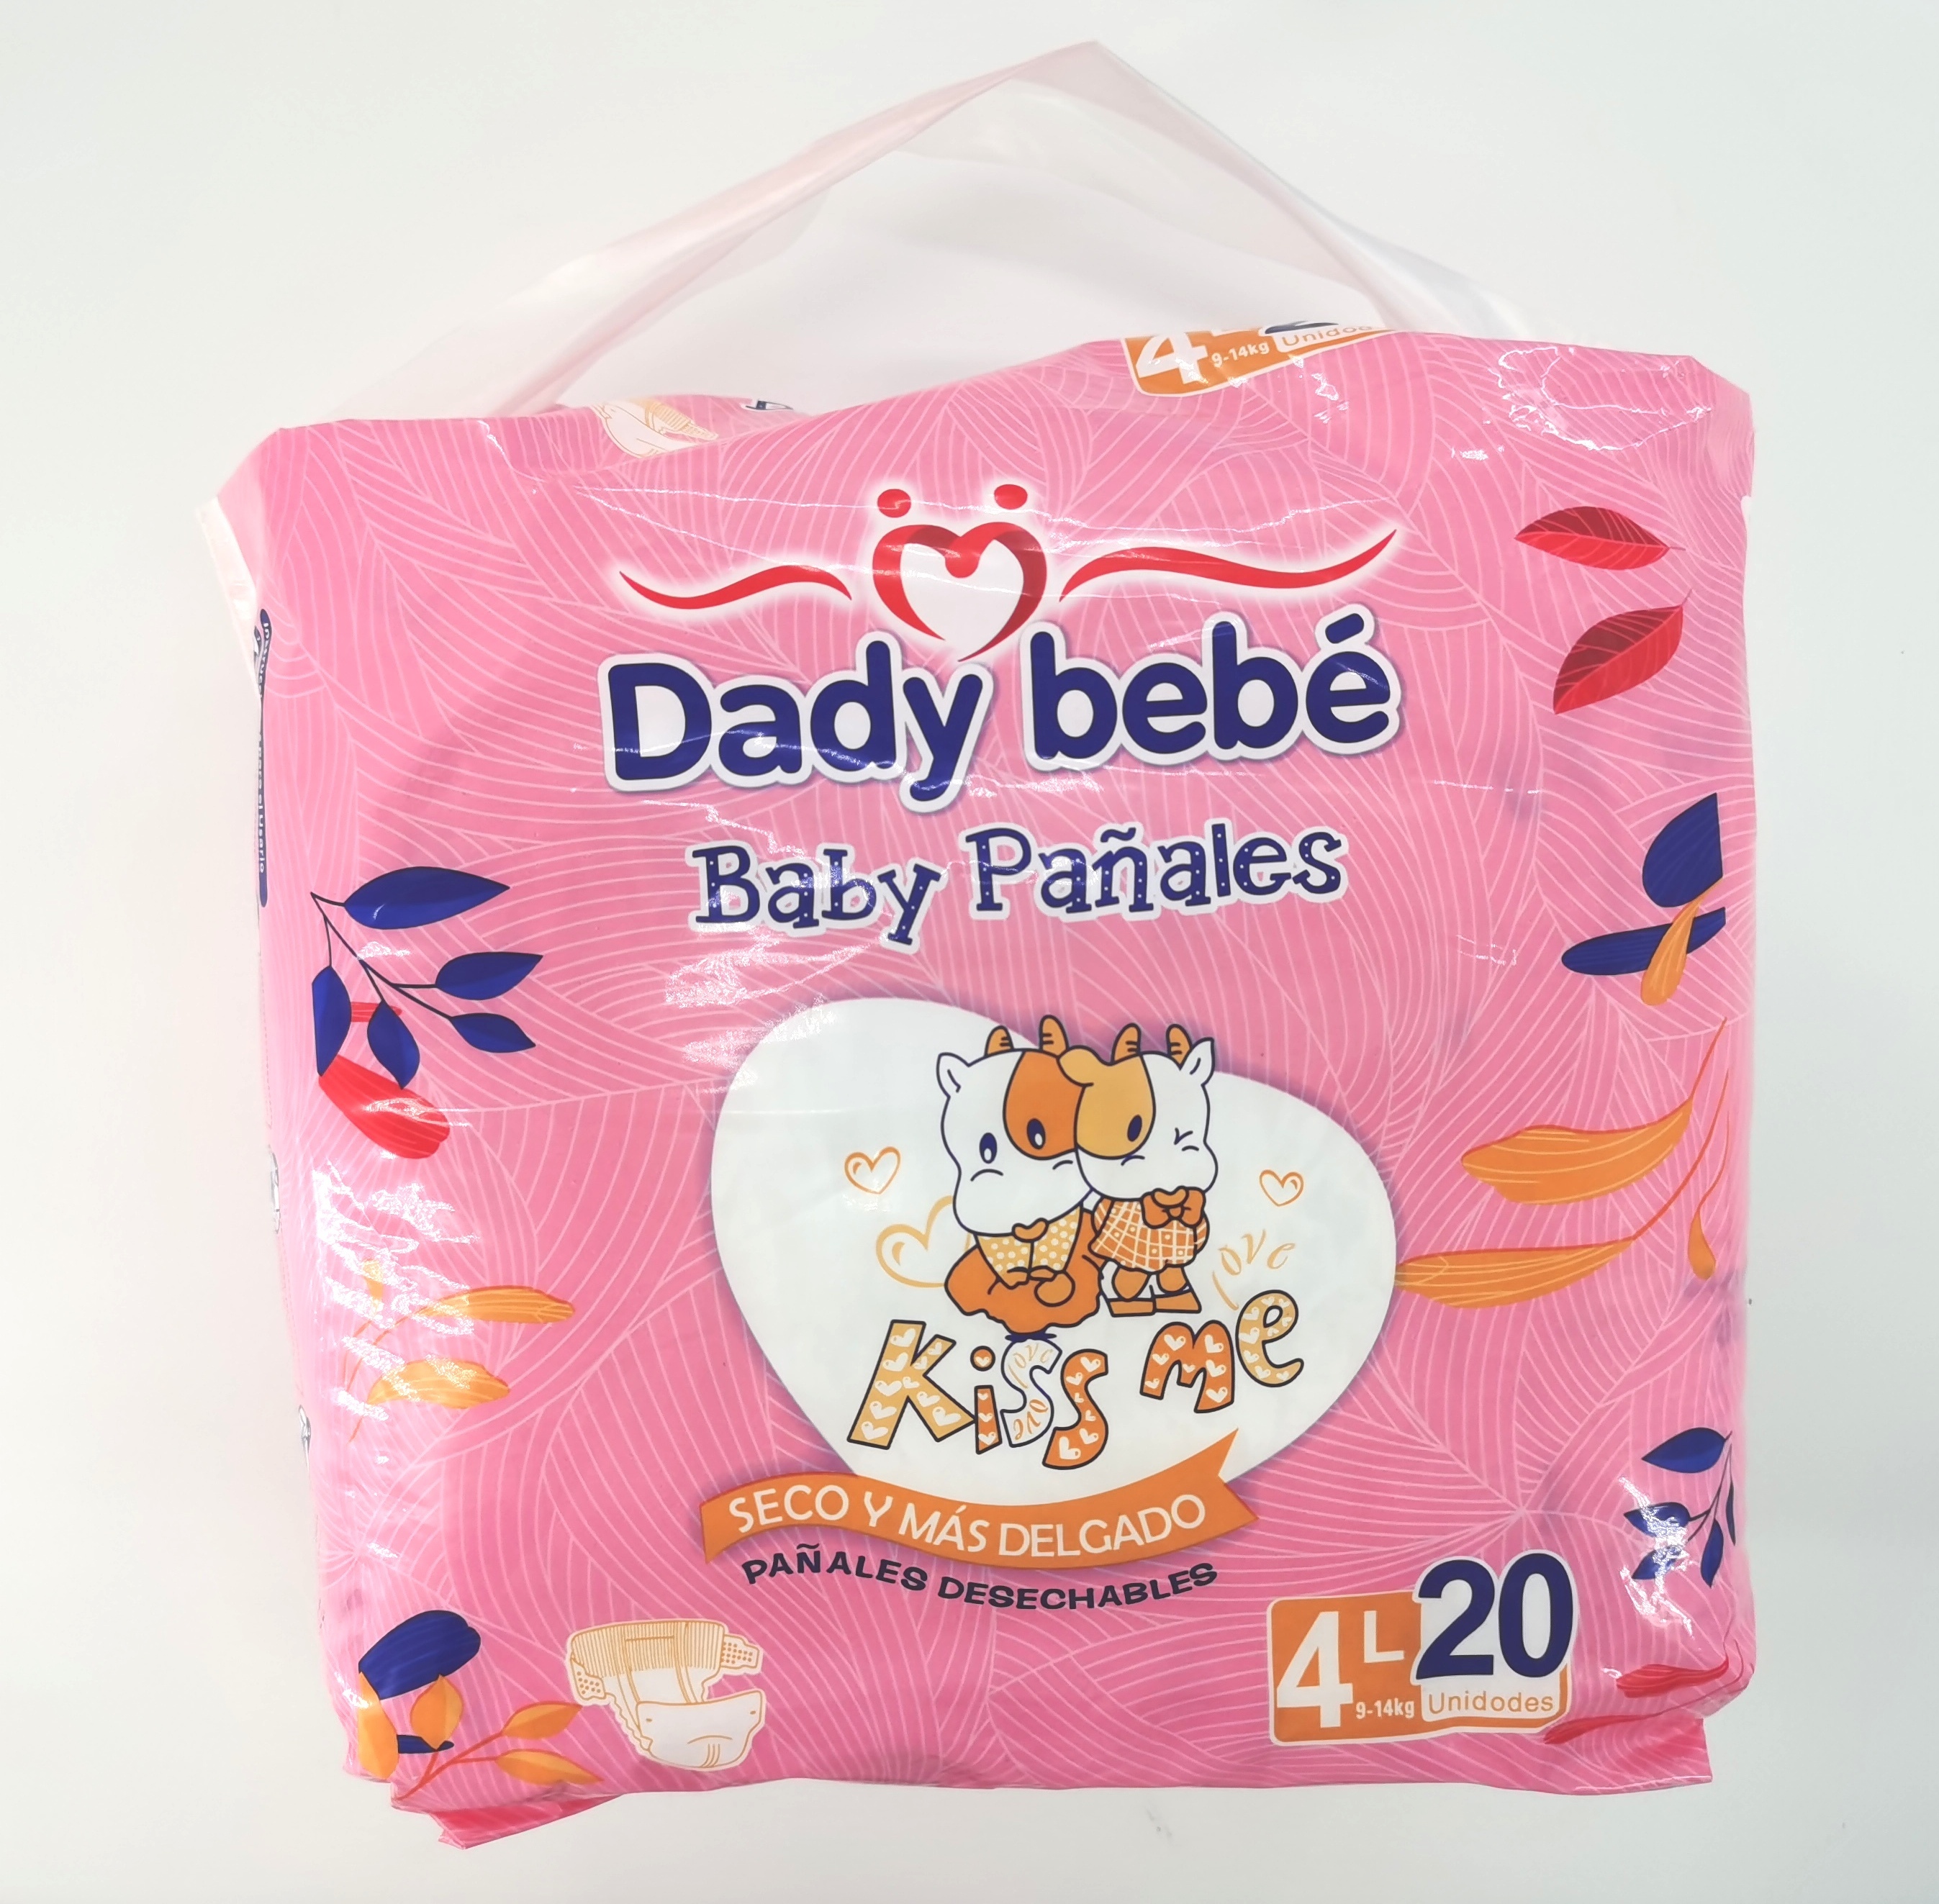 100% Original Factory Eq Dry Large - Baby diapers Japan santi Baby nappies Manufacturers Nigeria Africa Vietnam Market disposable diaper pad pull up pants panties – Ensha